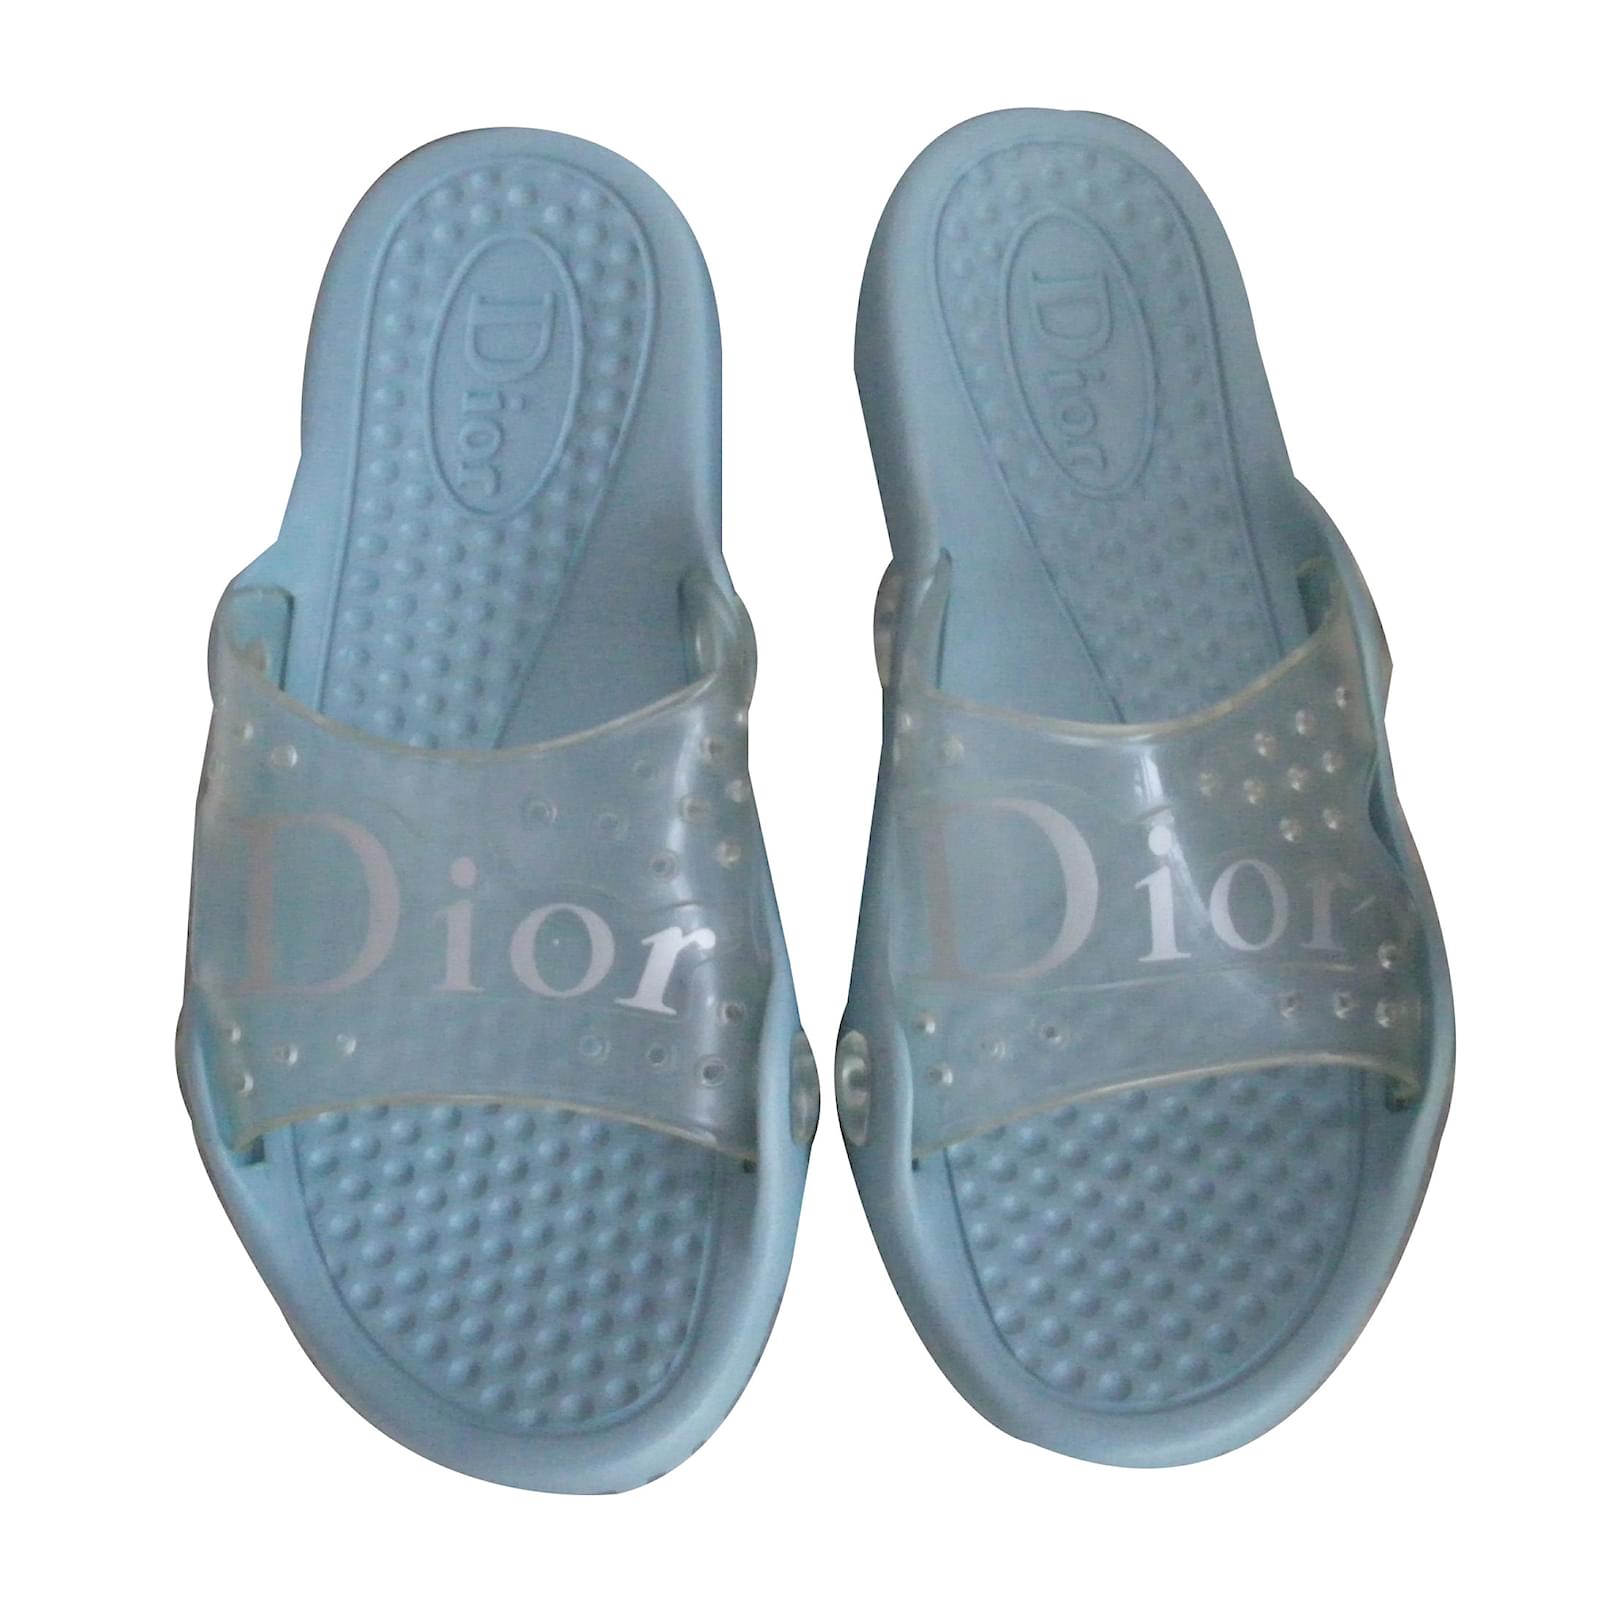 dior flip flops